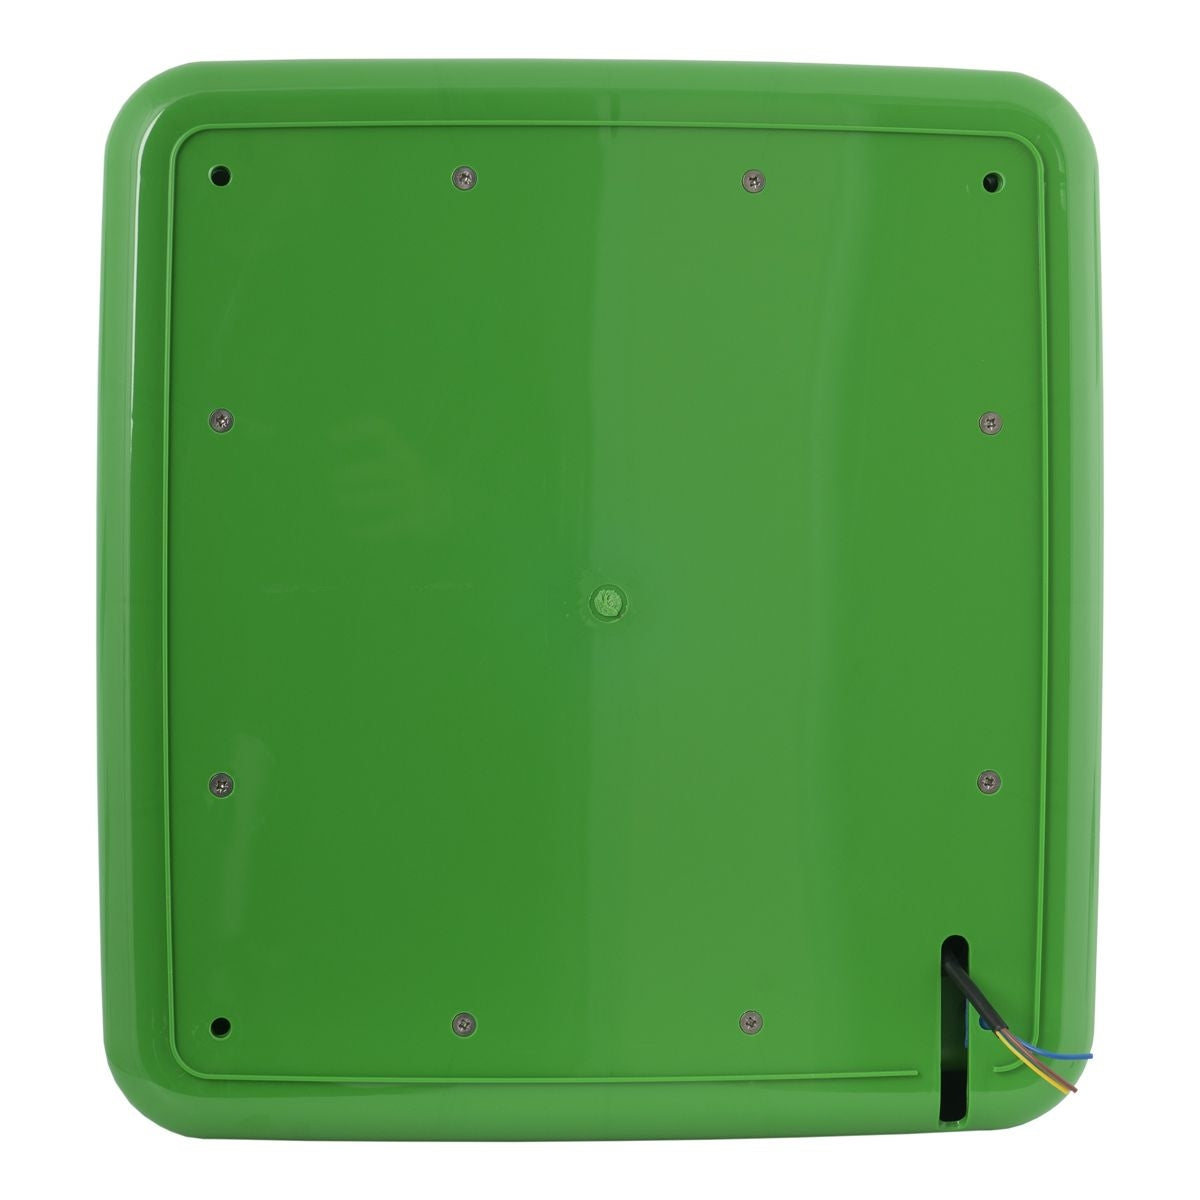 Defibstore 4000 - Defib Cabinet w/ Heater & Light - Keypad Lock - Green